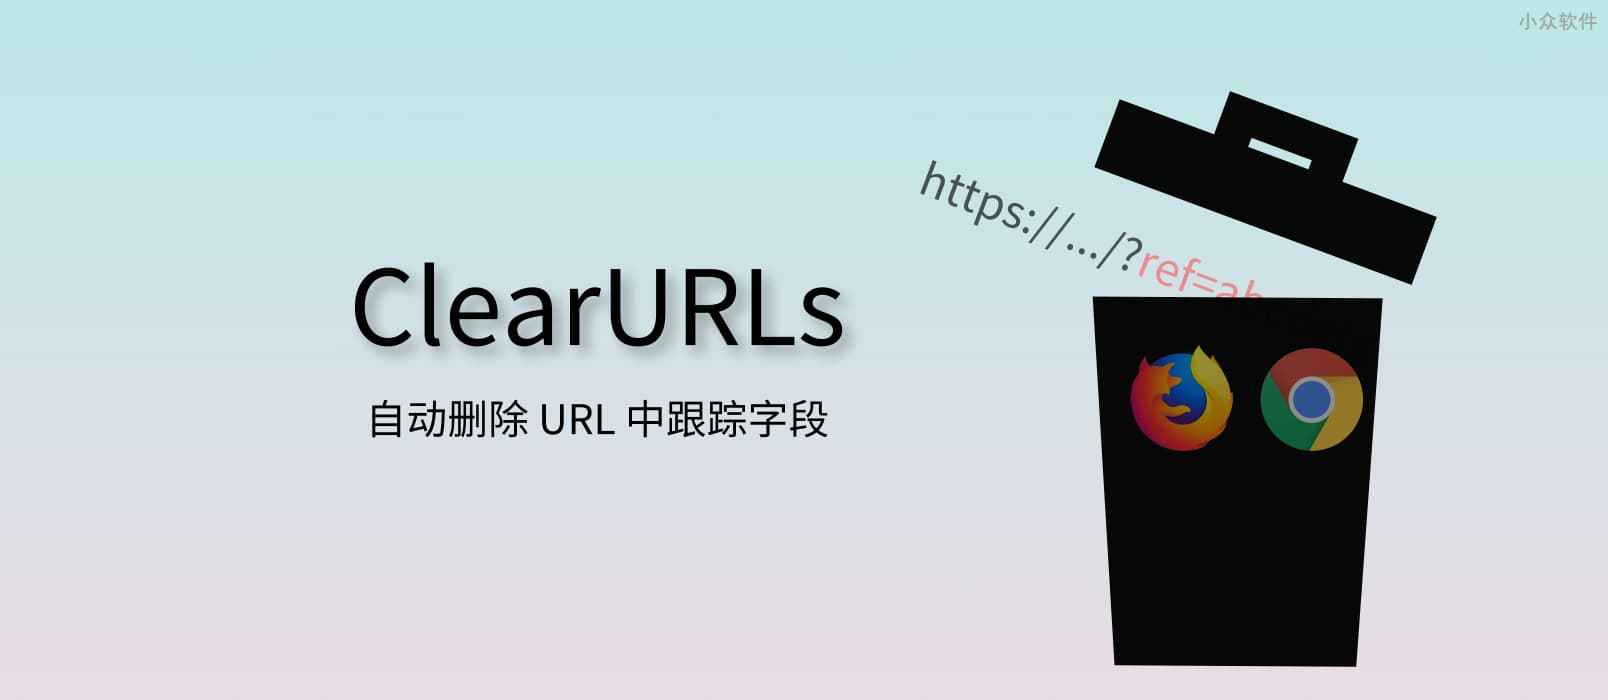 ClearURLs - 自动删除 URL 中跟踪字段[Chrome/Firefox] 1